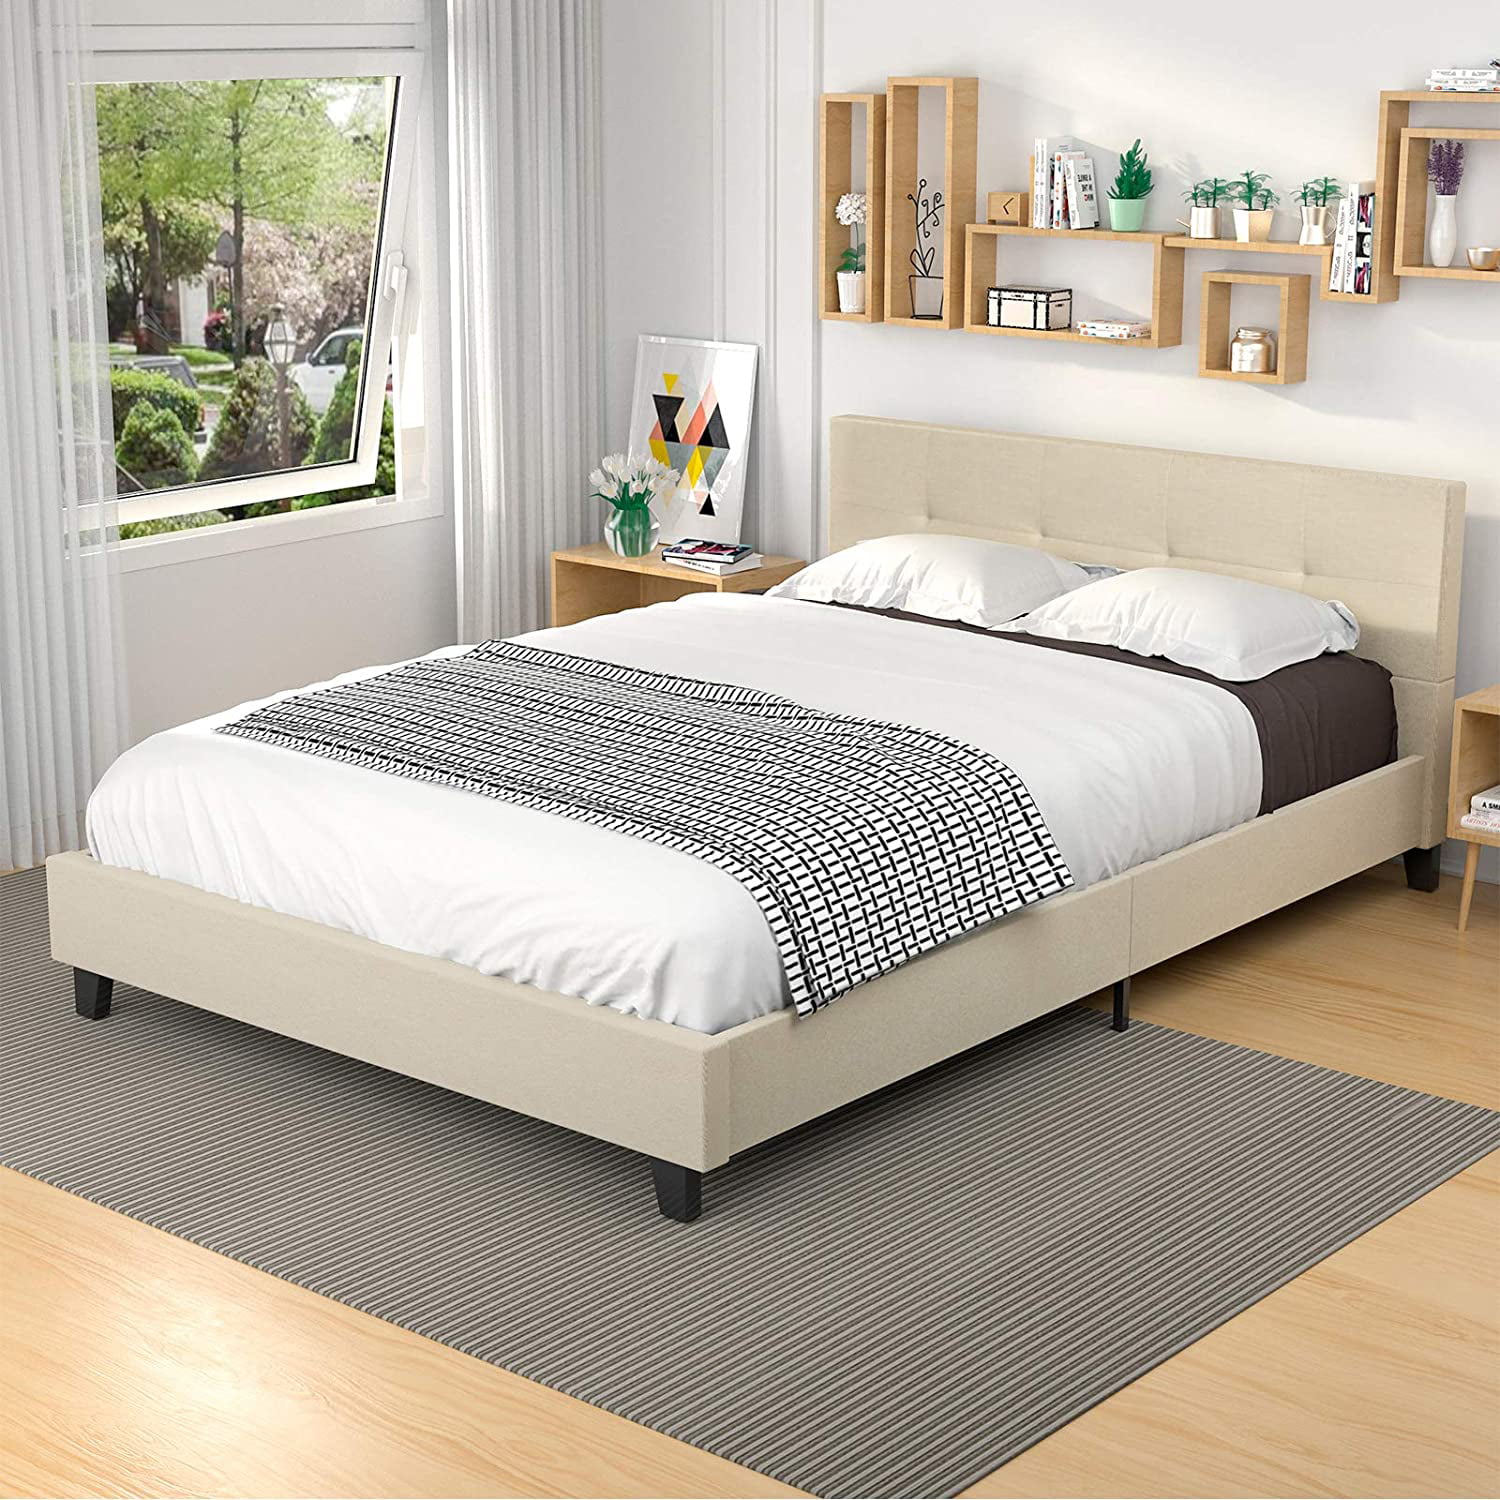 mecor Upholstered Linen Queen Platform Bed - Metal Frame with Tufted